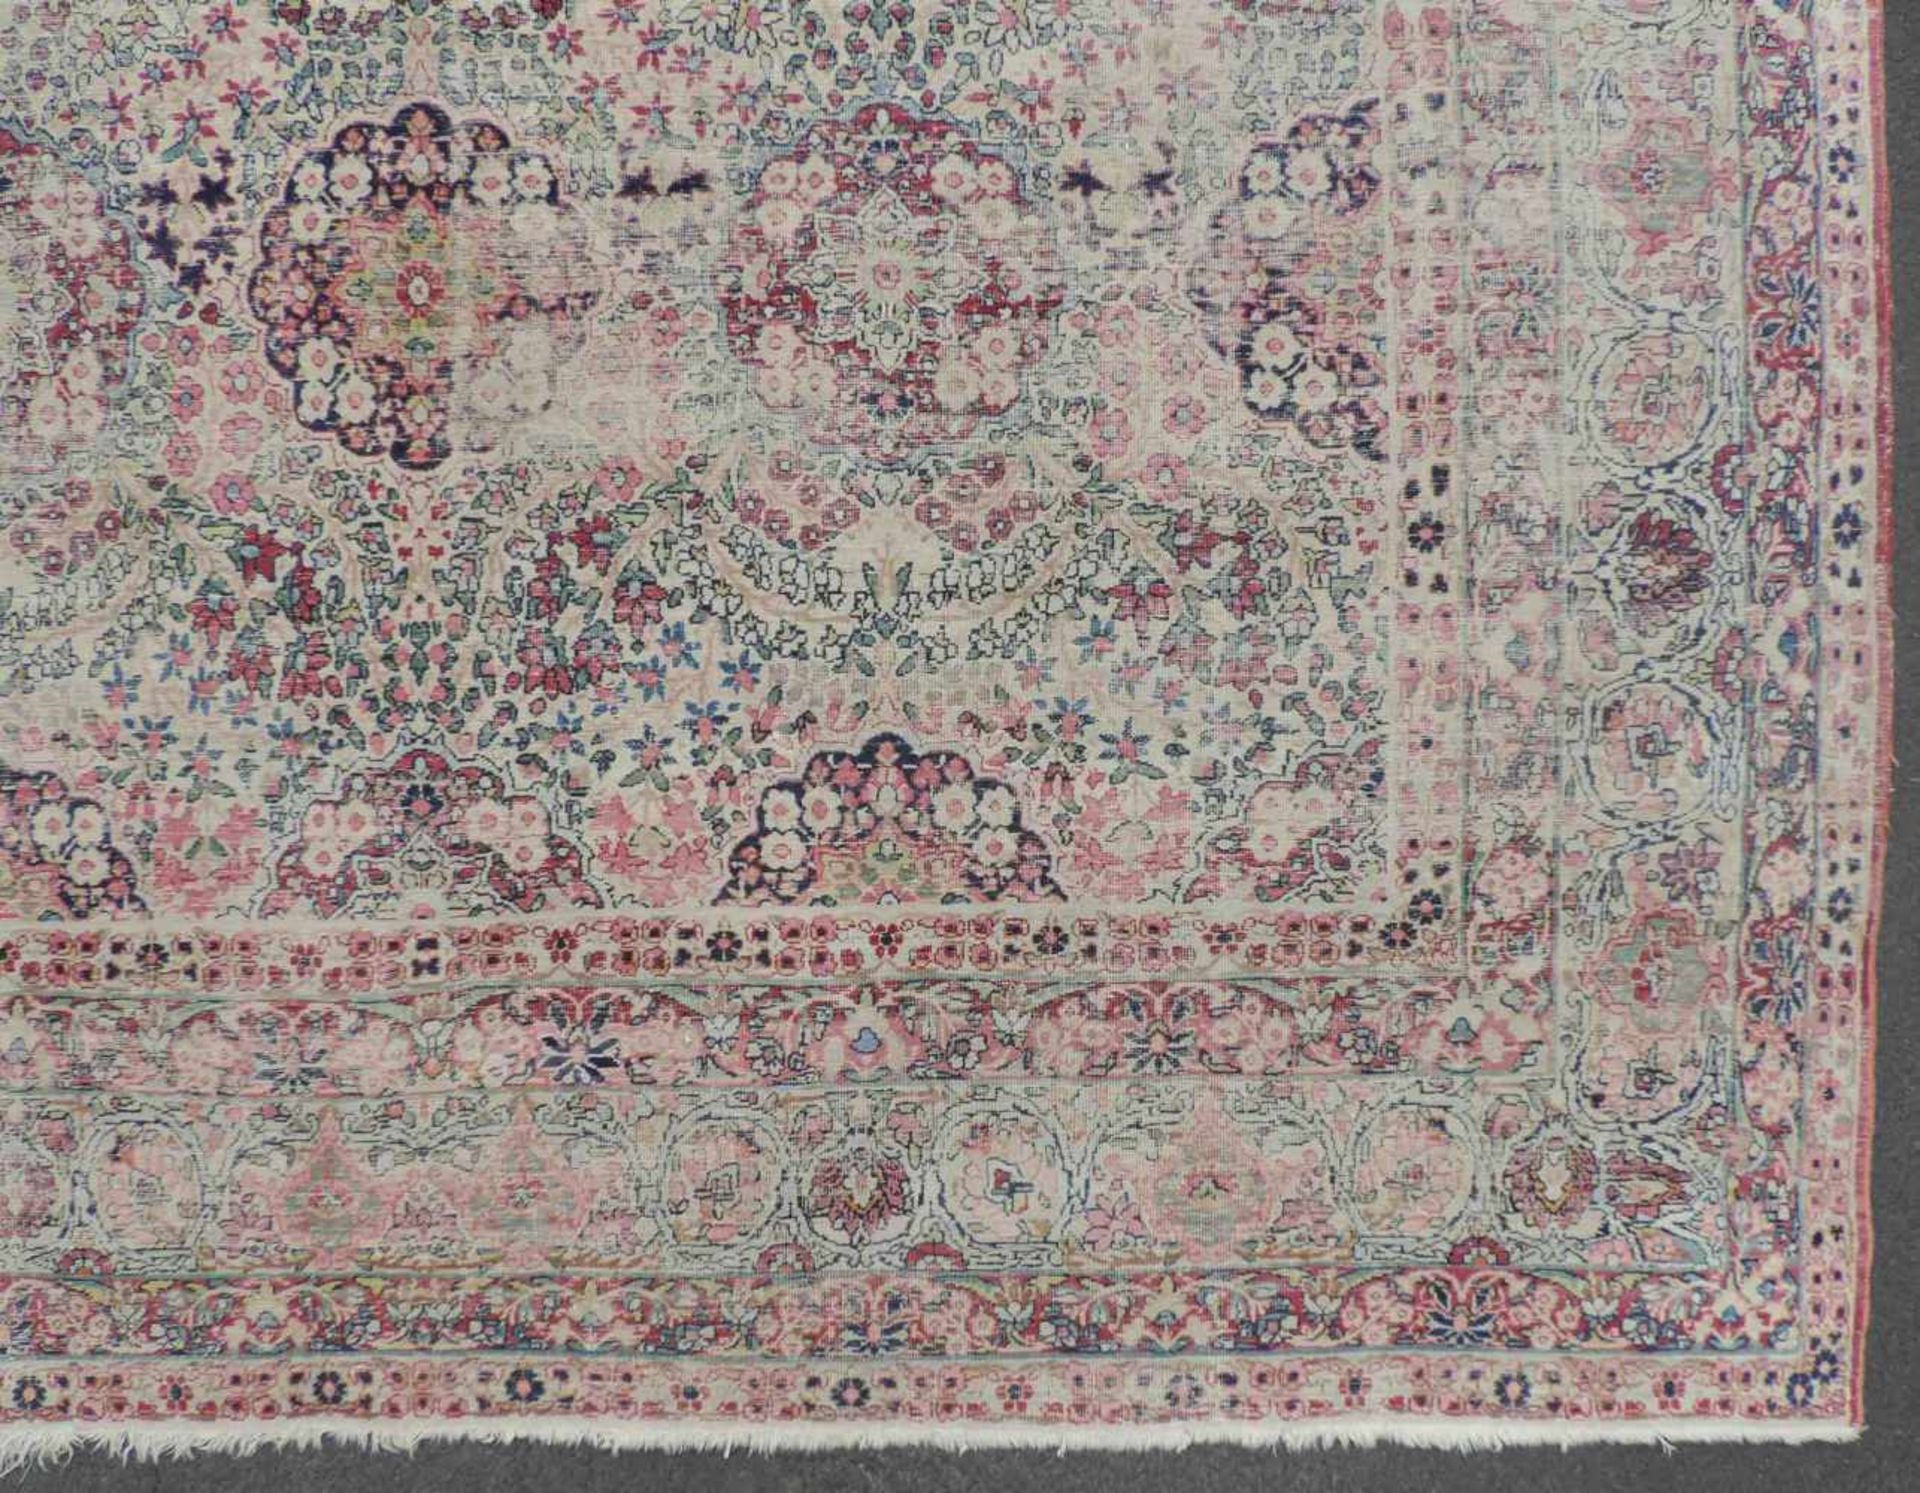 Kirman Laver Perserteppich. Iran. Antik, spätes 19. Jahrhundert. 329 cm x 275 cm. Handgeknüpft. - Bild 3 aus 8